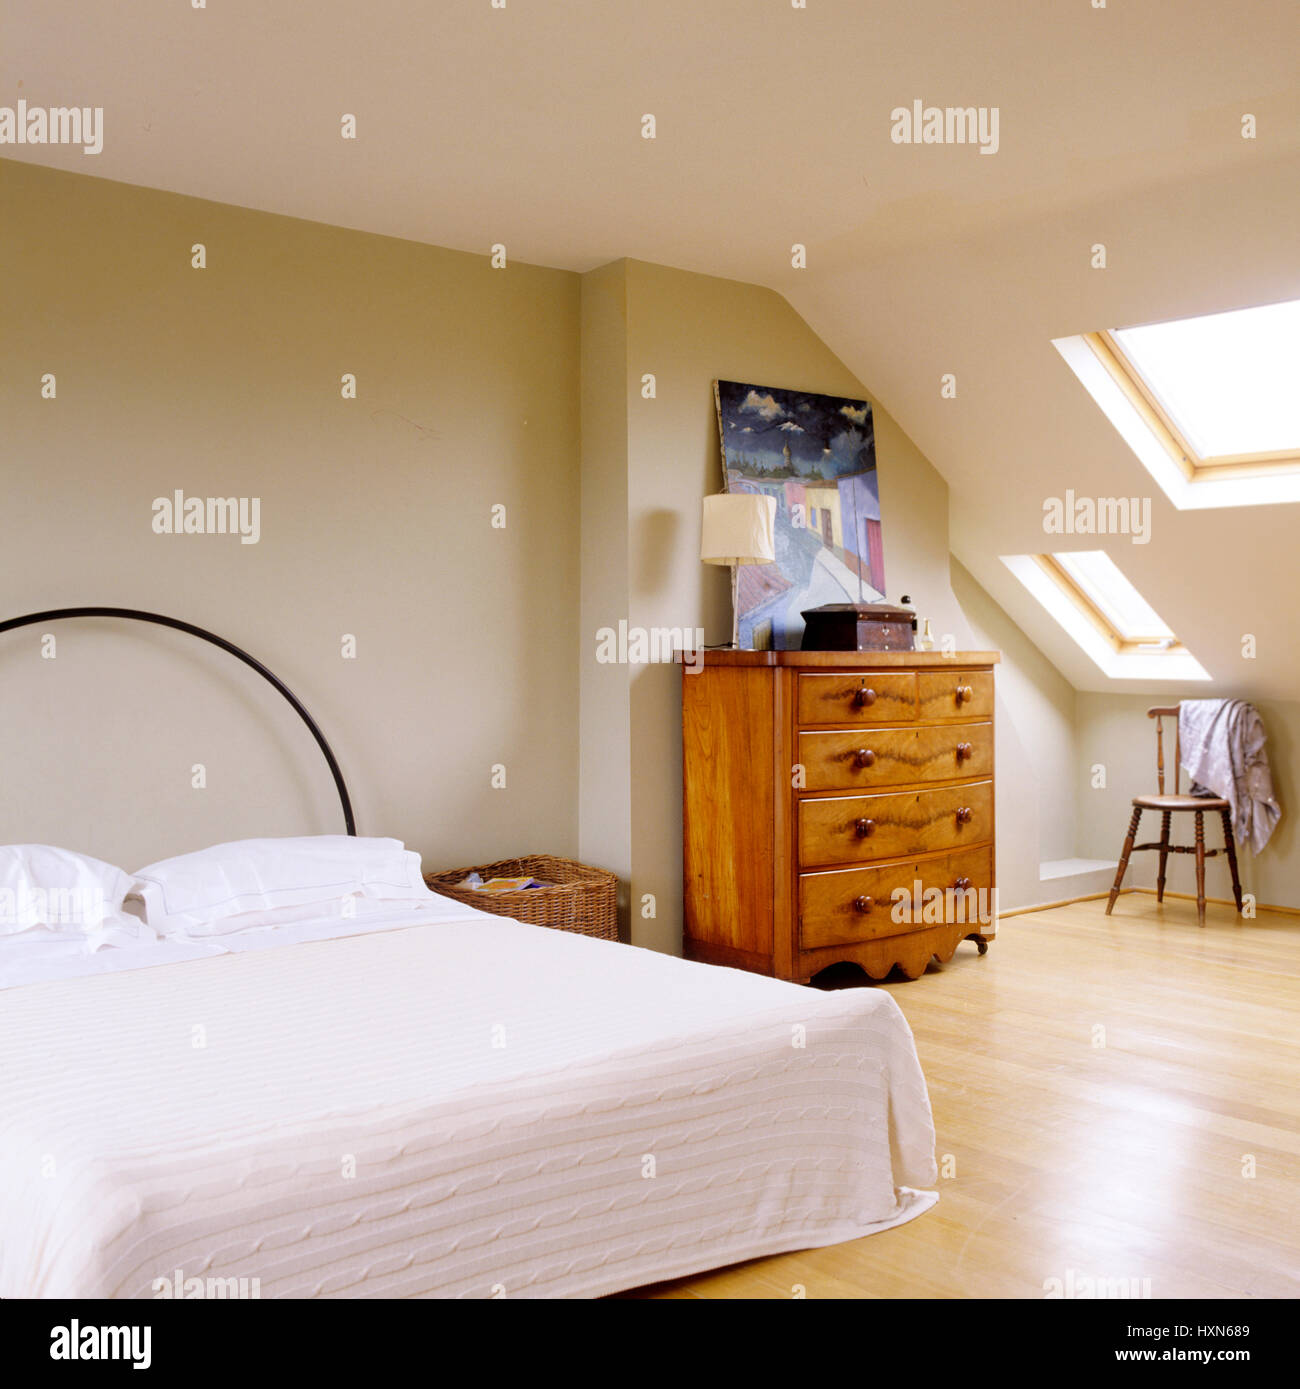 https://c8.alamy.com/comp/HXN689/simplistic-bedroom-HXN689.jpg